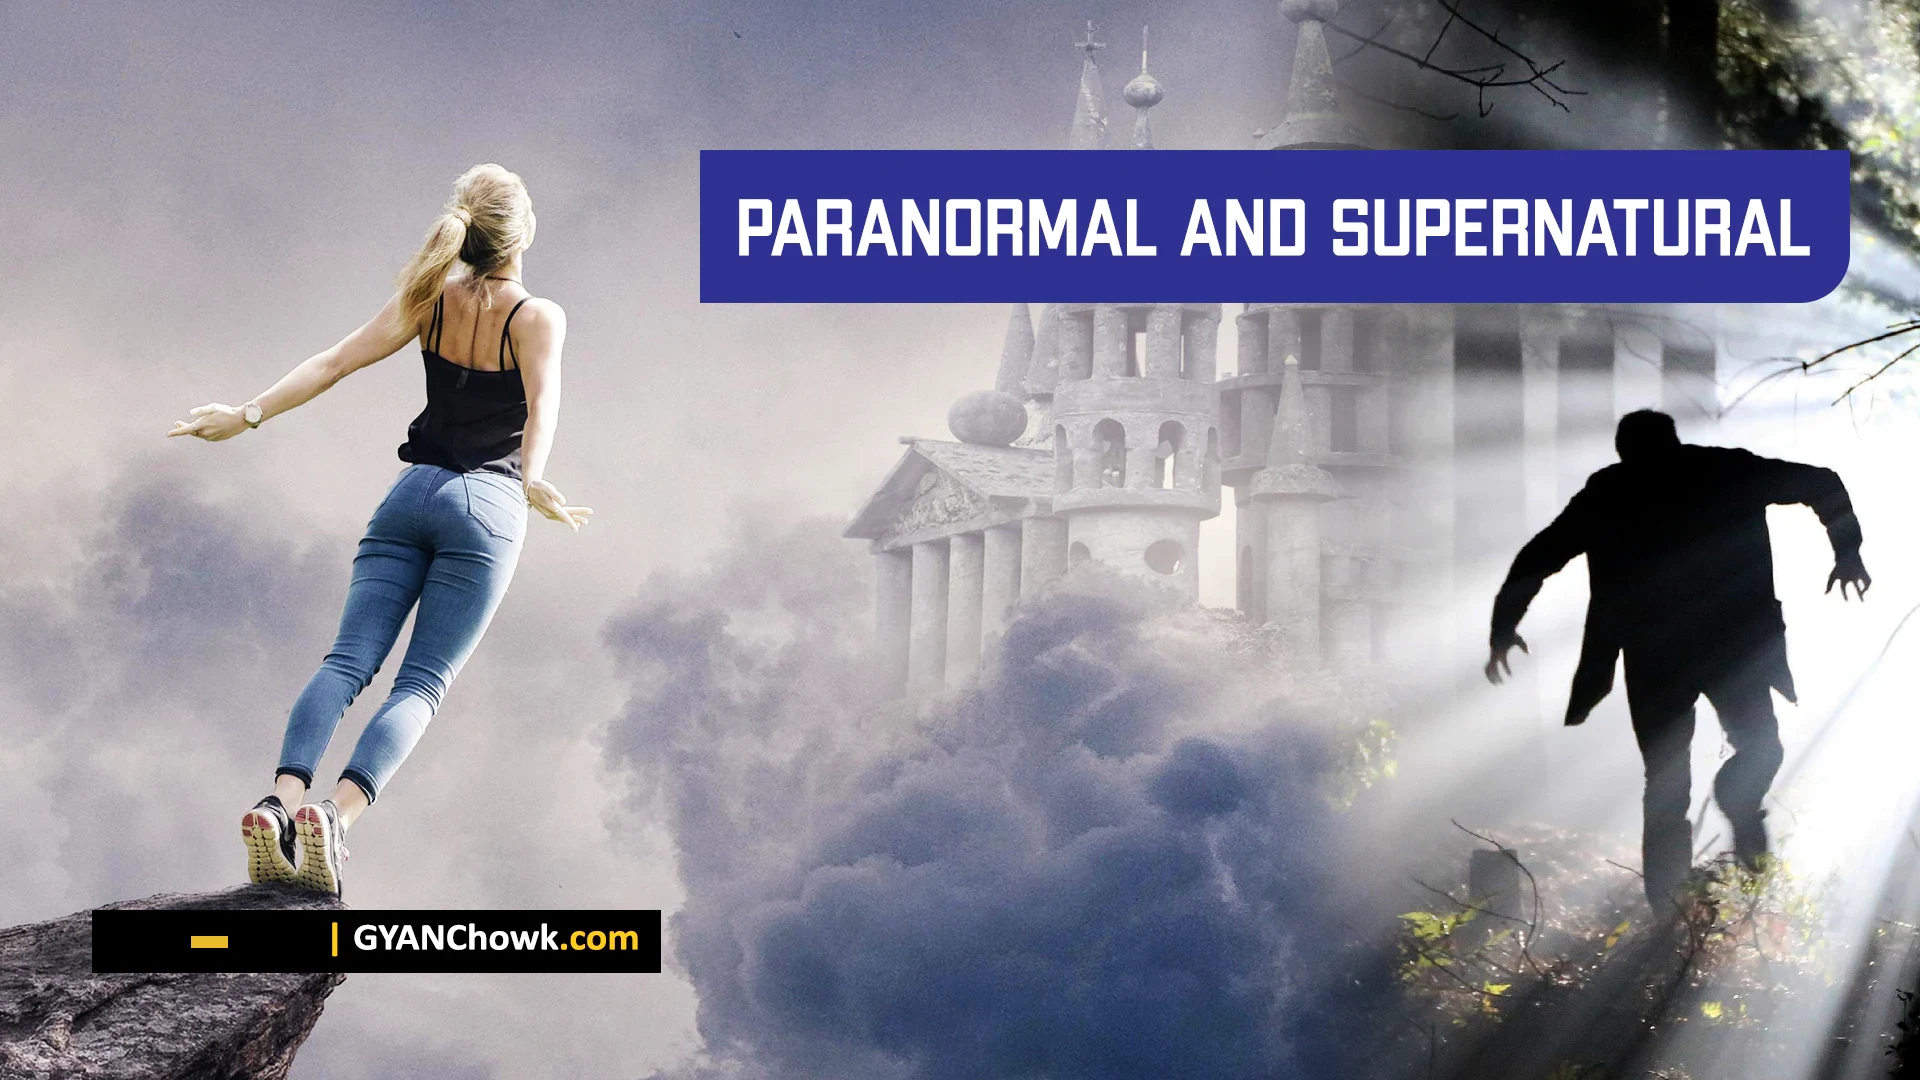 पैरानोर्मल और सुपरनैचुरल - Paranormal and Supernatural in Hindi